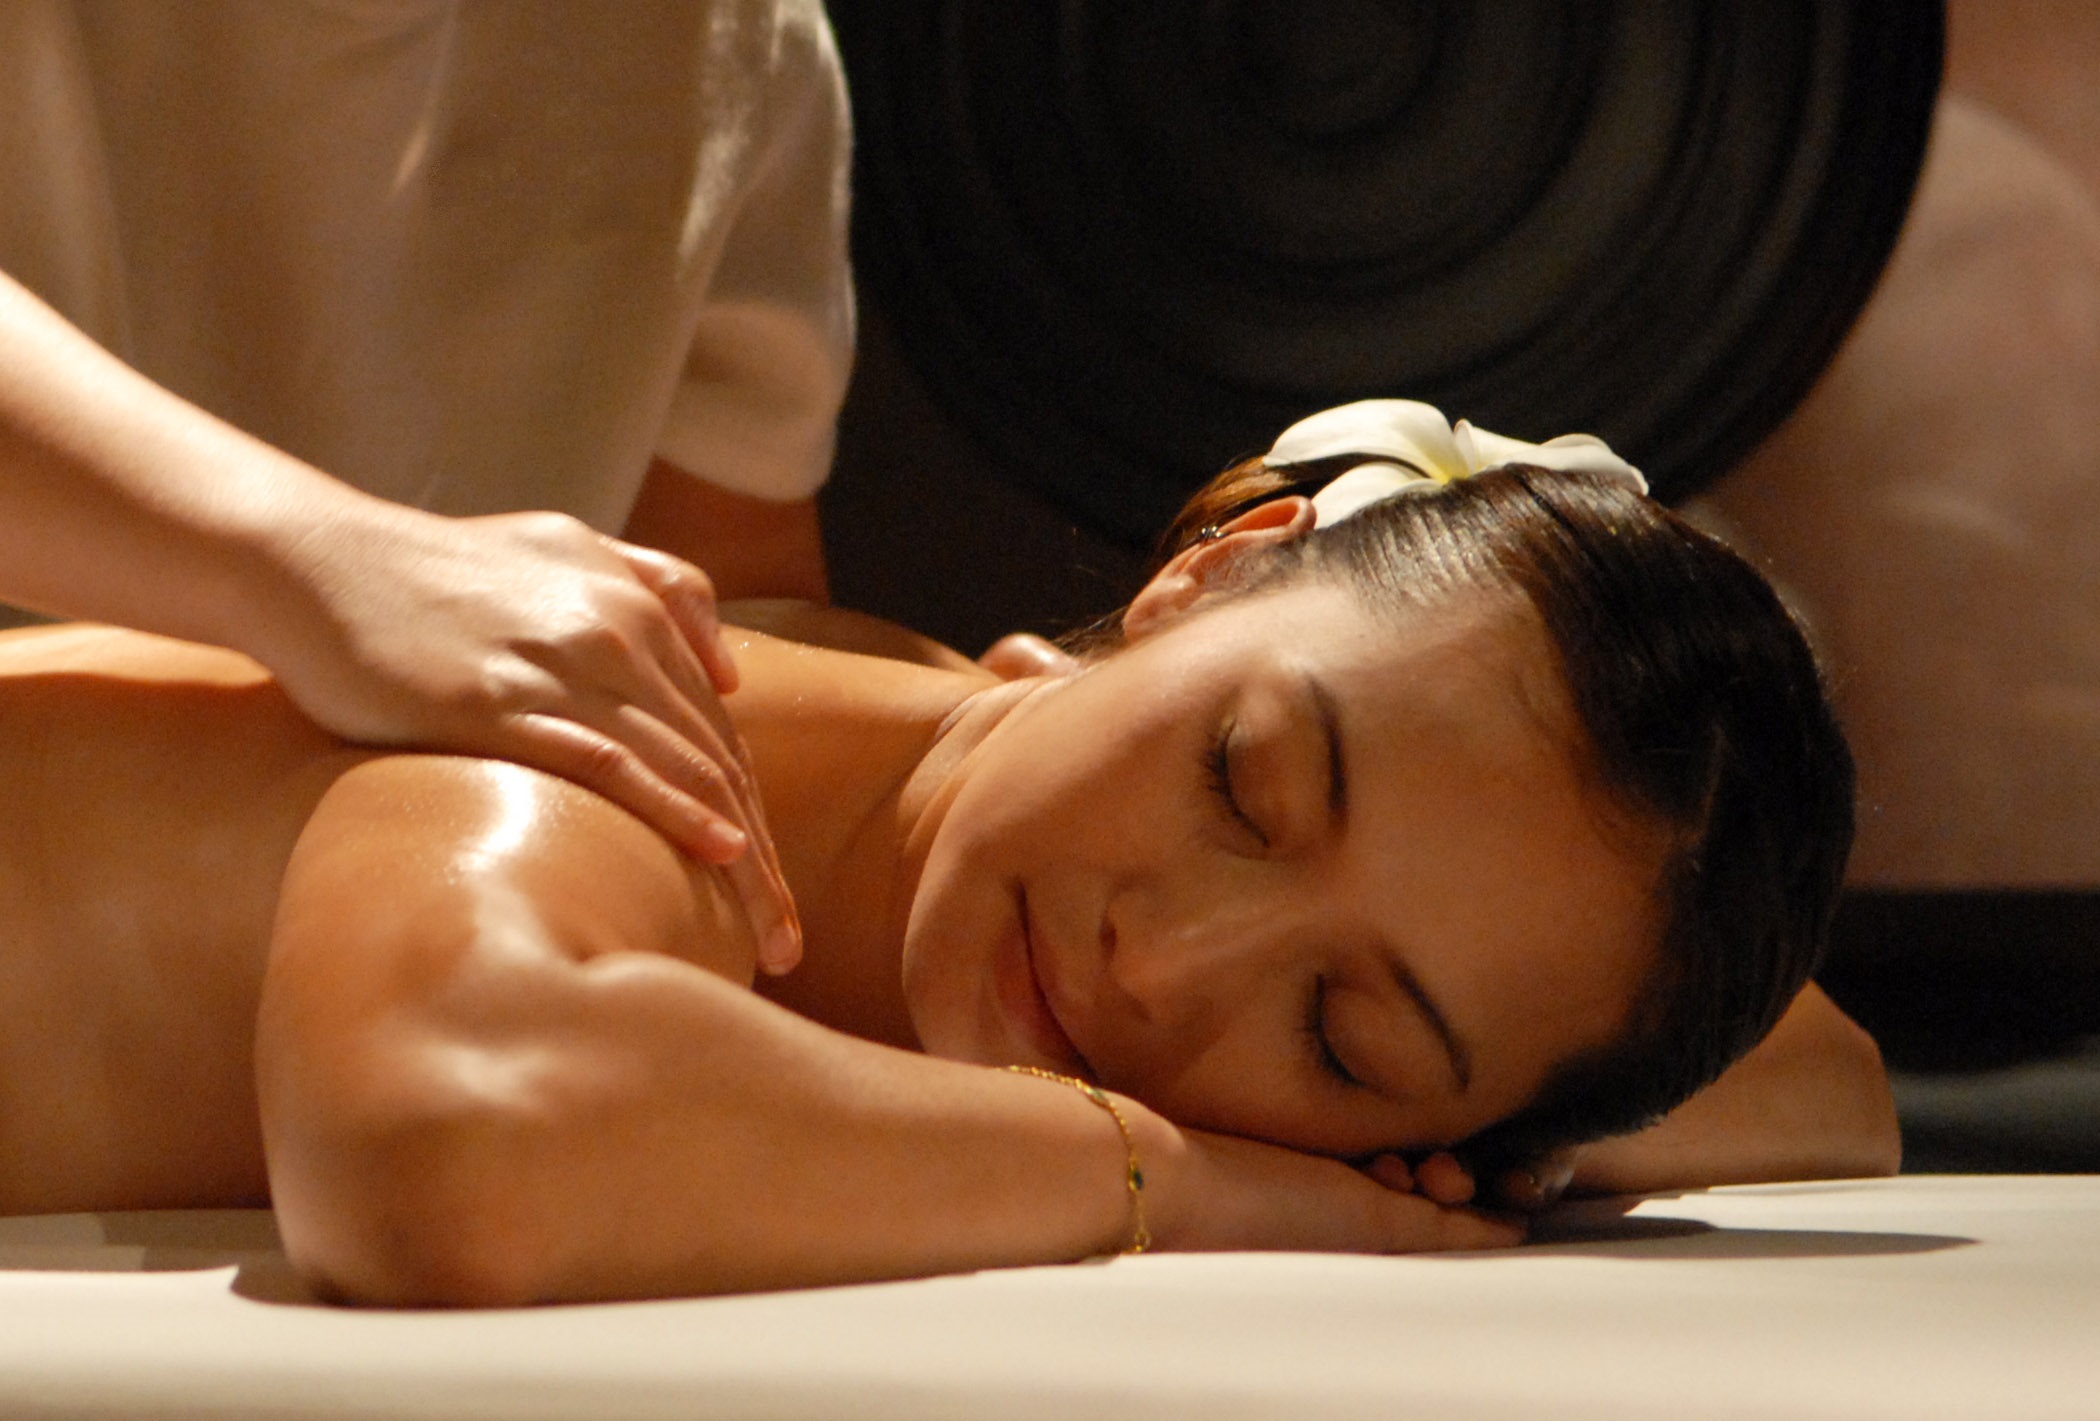 dinesh bellamkonda recommends body slide massage videos pic